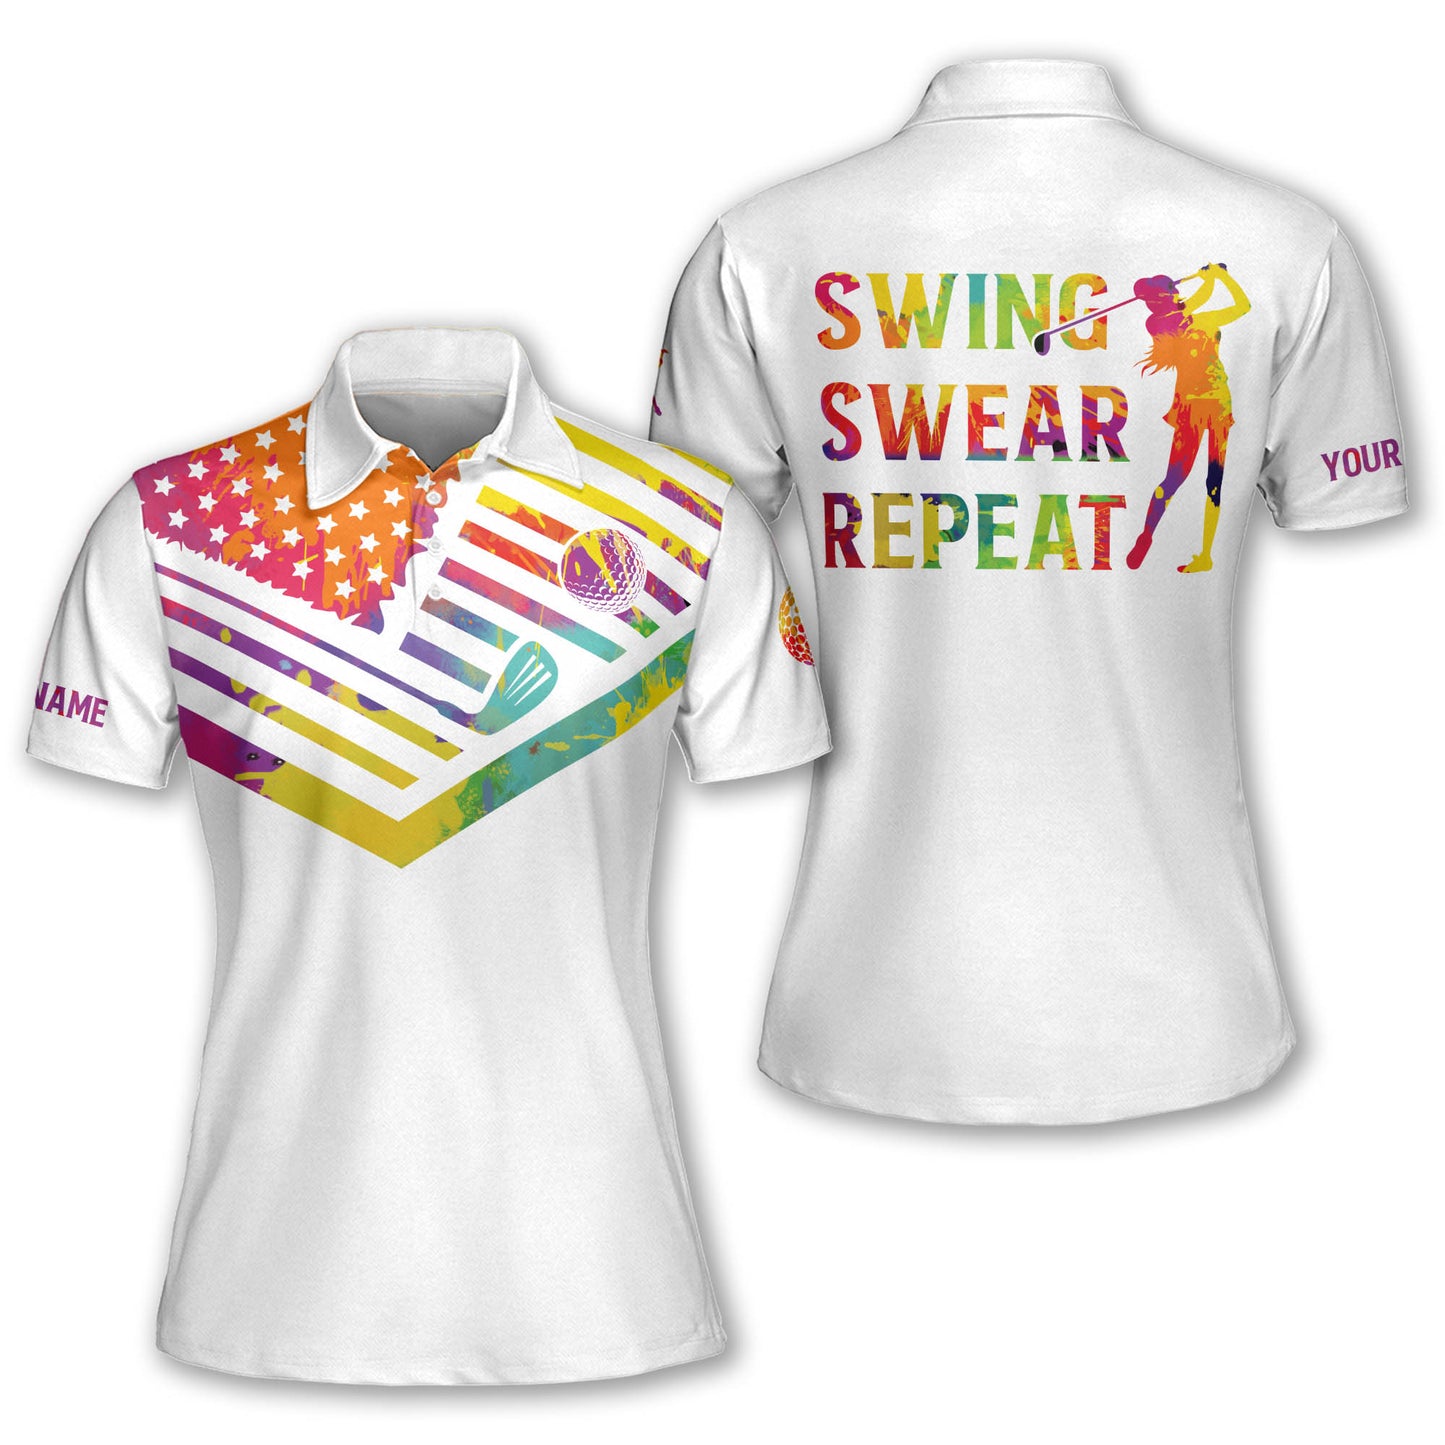 American Swing Swear Repeat Golf Shirt I0512